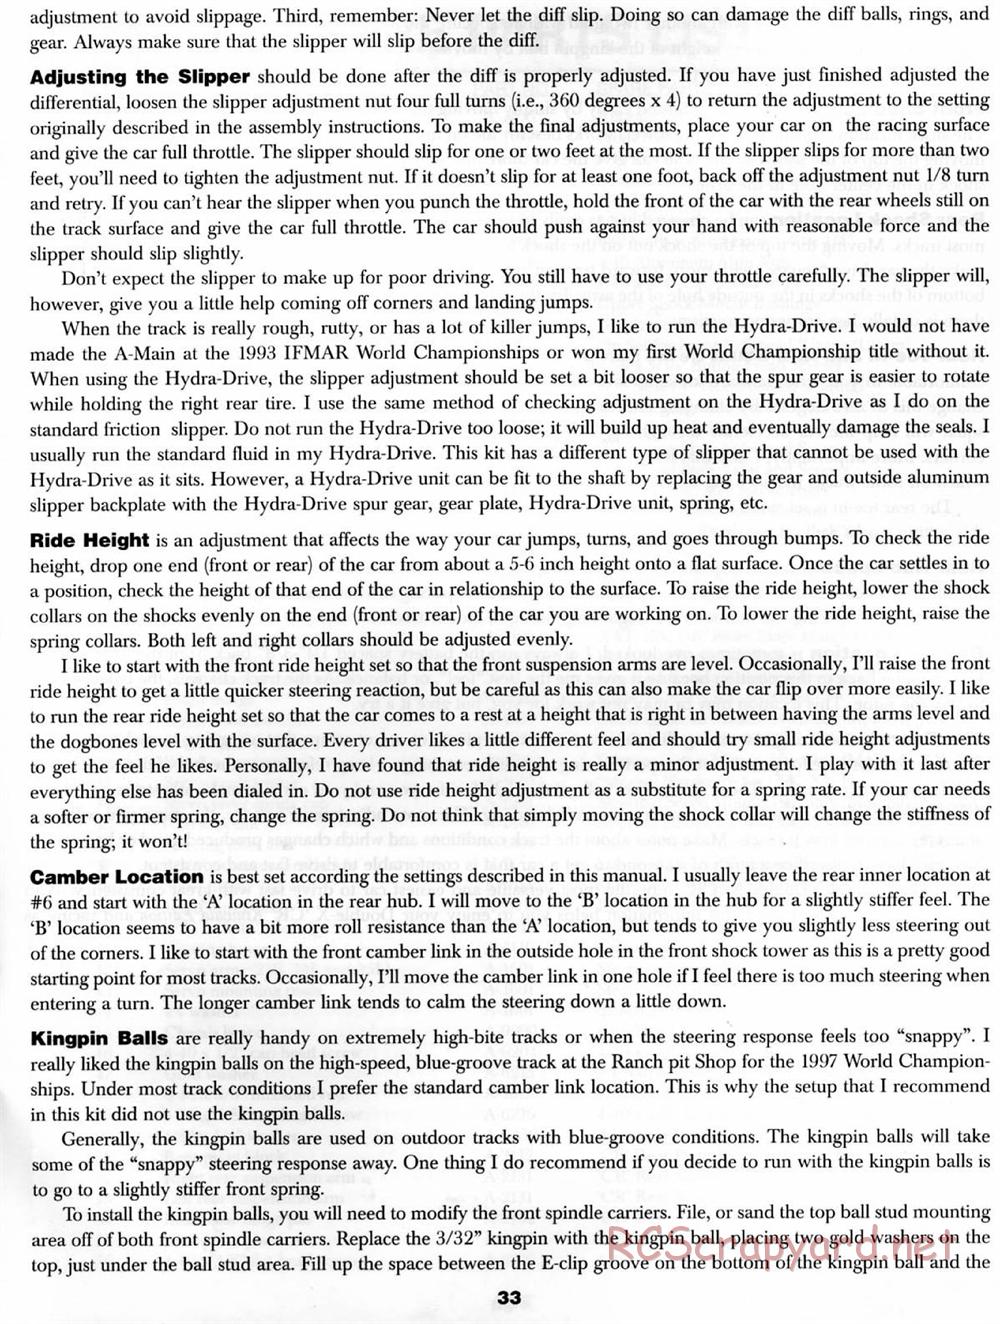 Team Losi - XX CR Kinwald Edition - Manual - Page 36